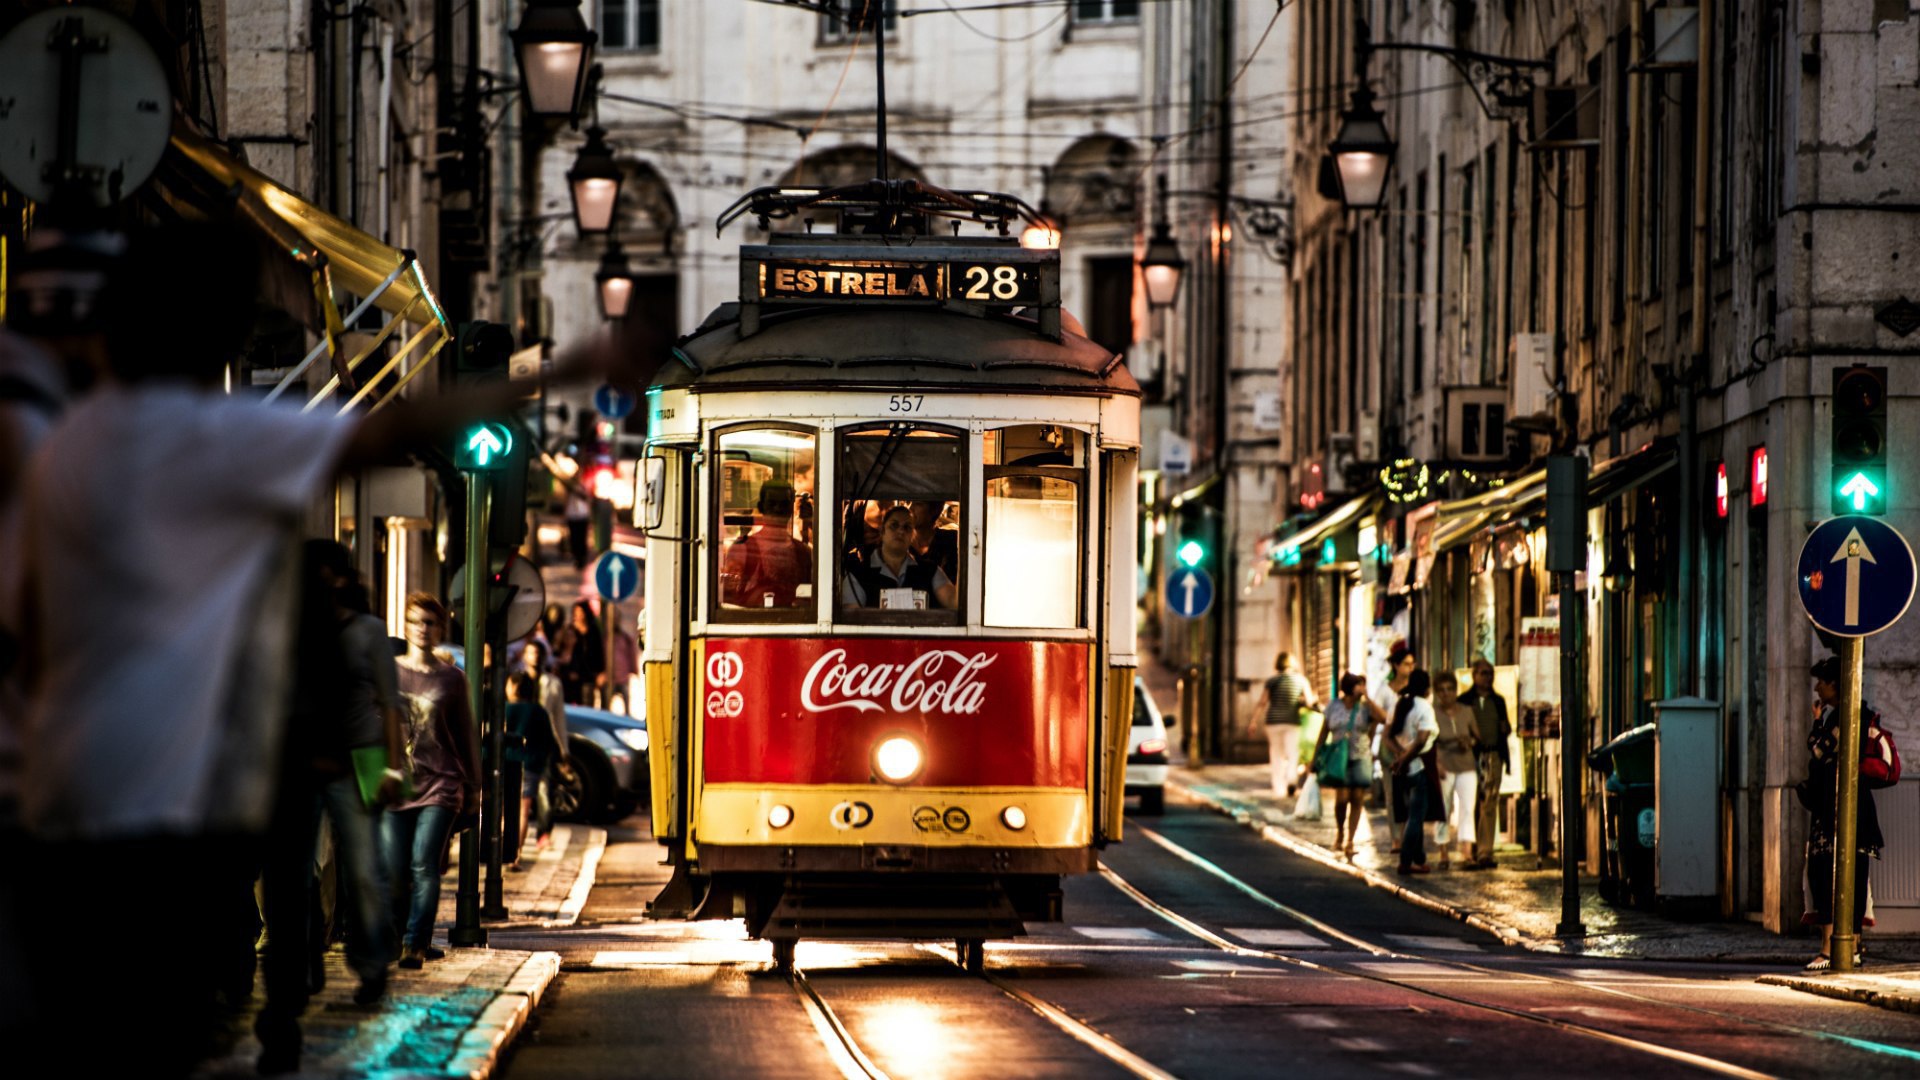 Трамвай в Лиссабоне, Португалия